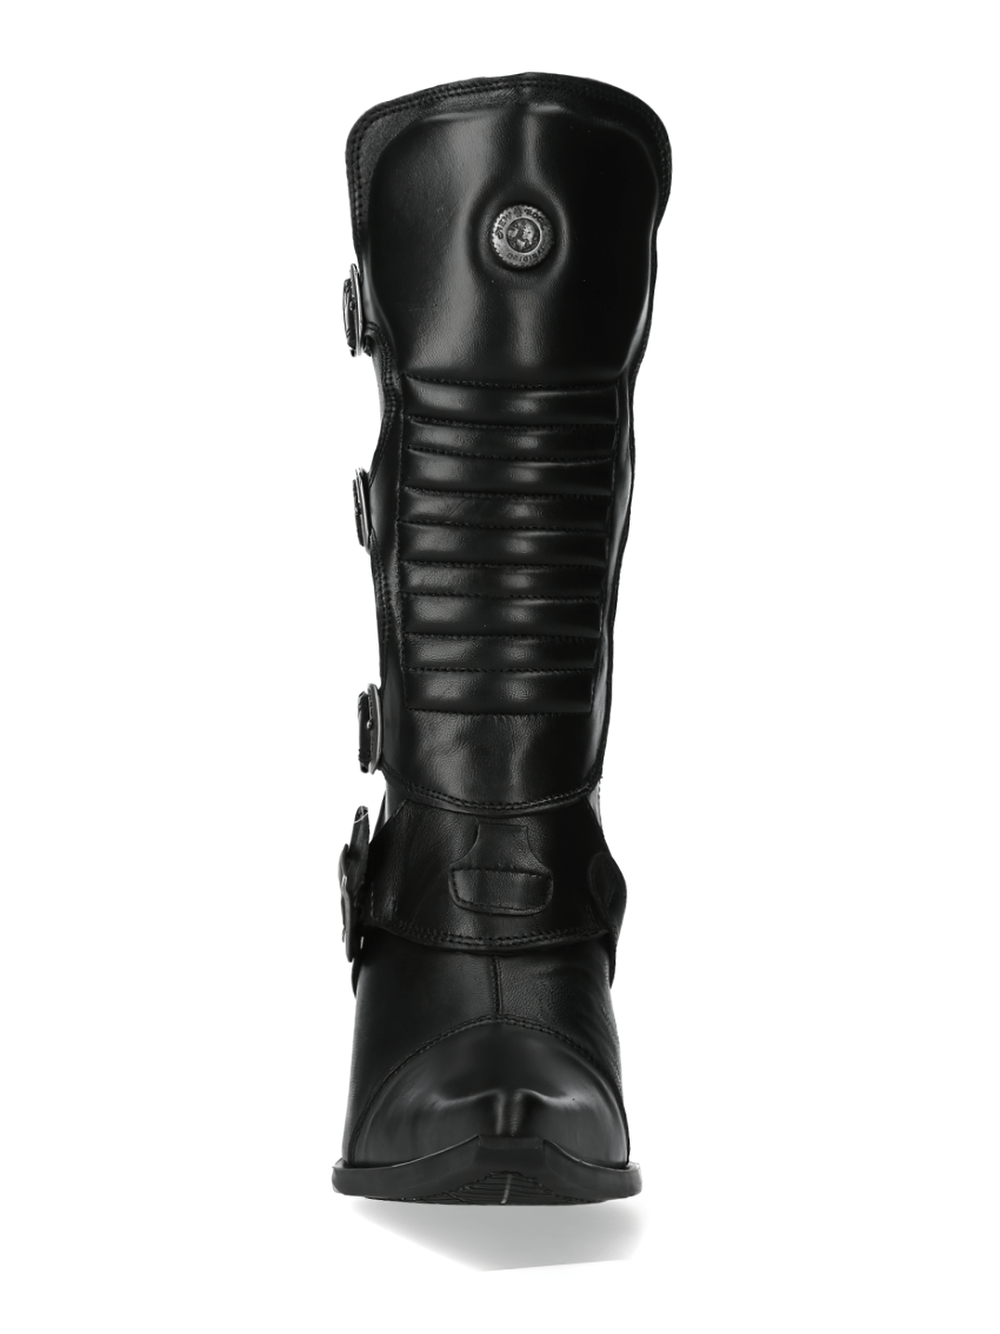 NEW ROCK Striking Black Leather High Heel Boots